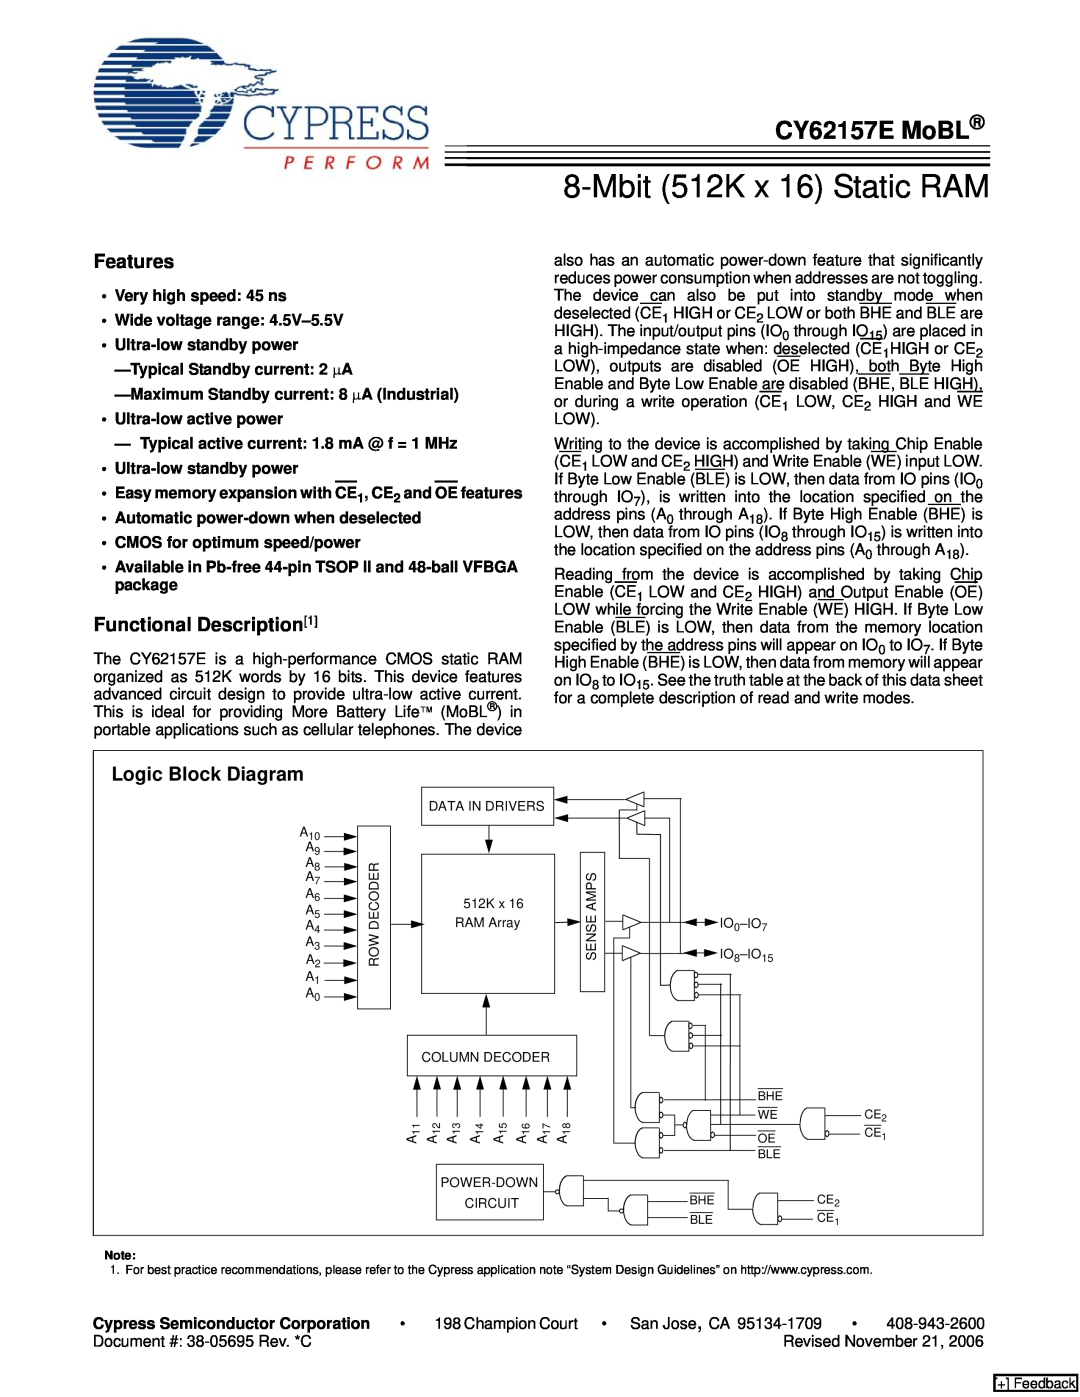 Cypress manual CY62157E MoBL, Features, Functional Description1, Logic Block Diagram, Mbit 512K x 16 Static RAM 